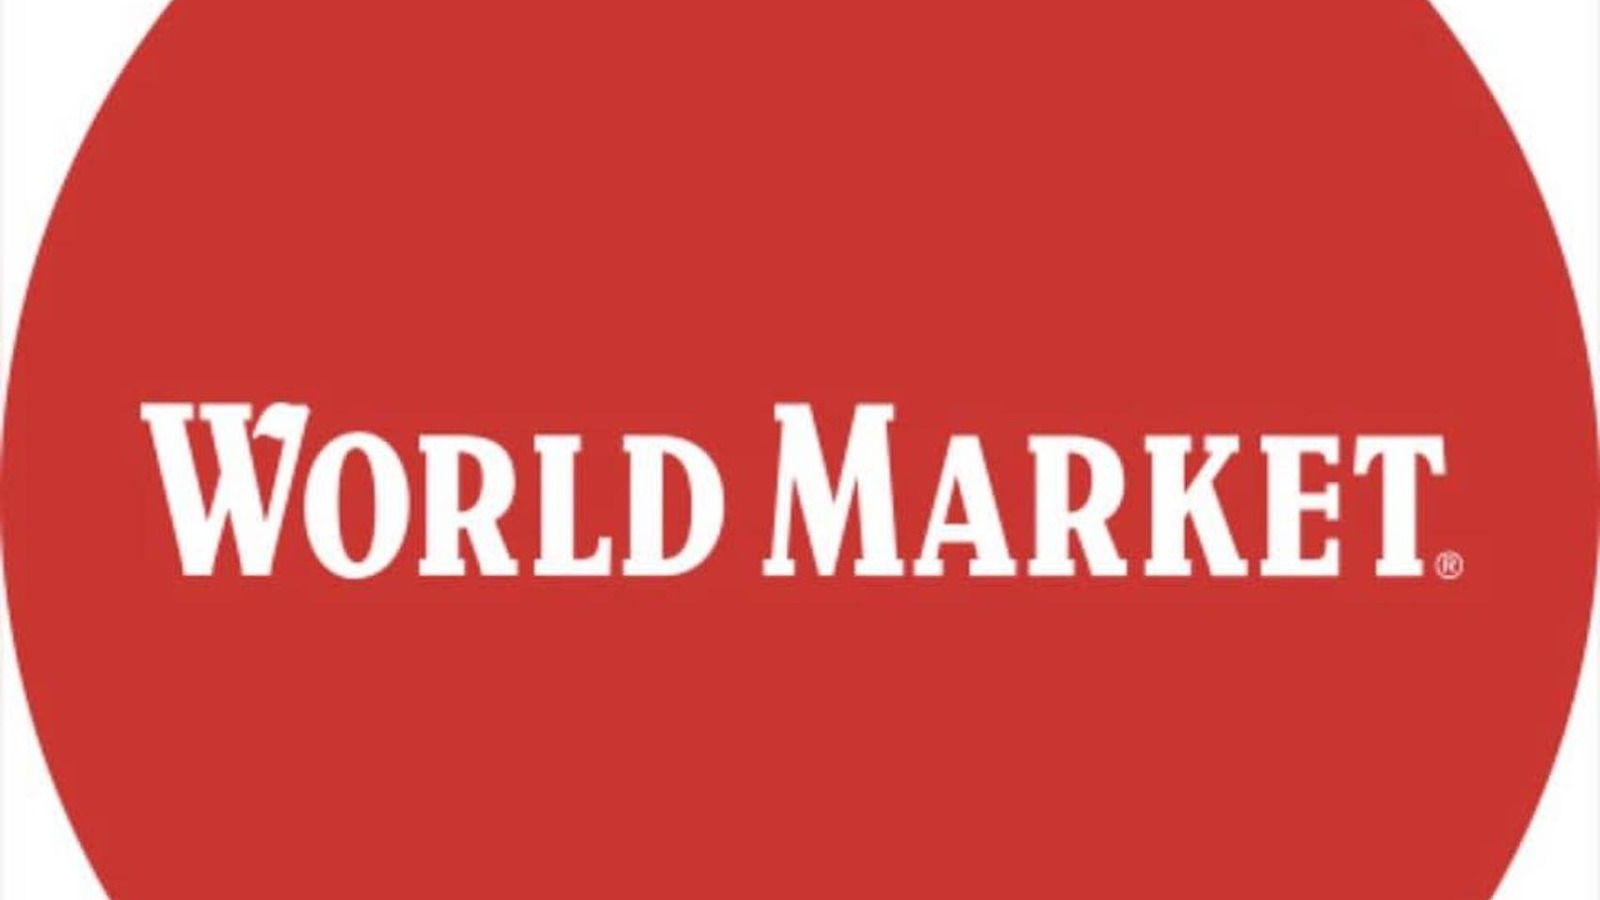 Ворлд маркет. World Market.